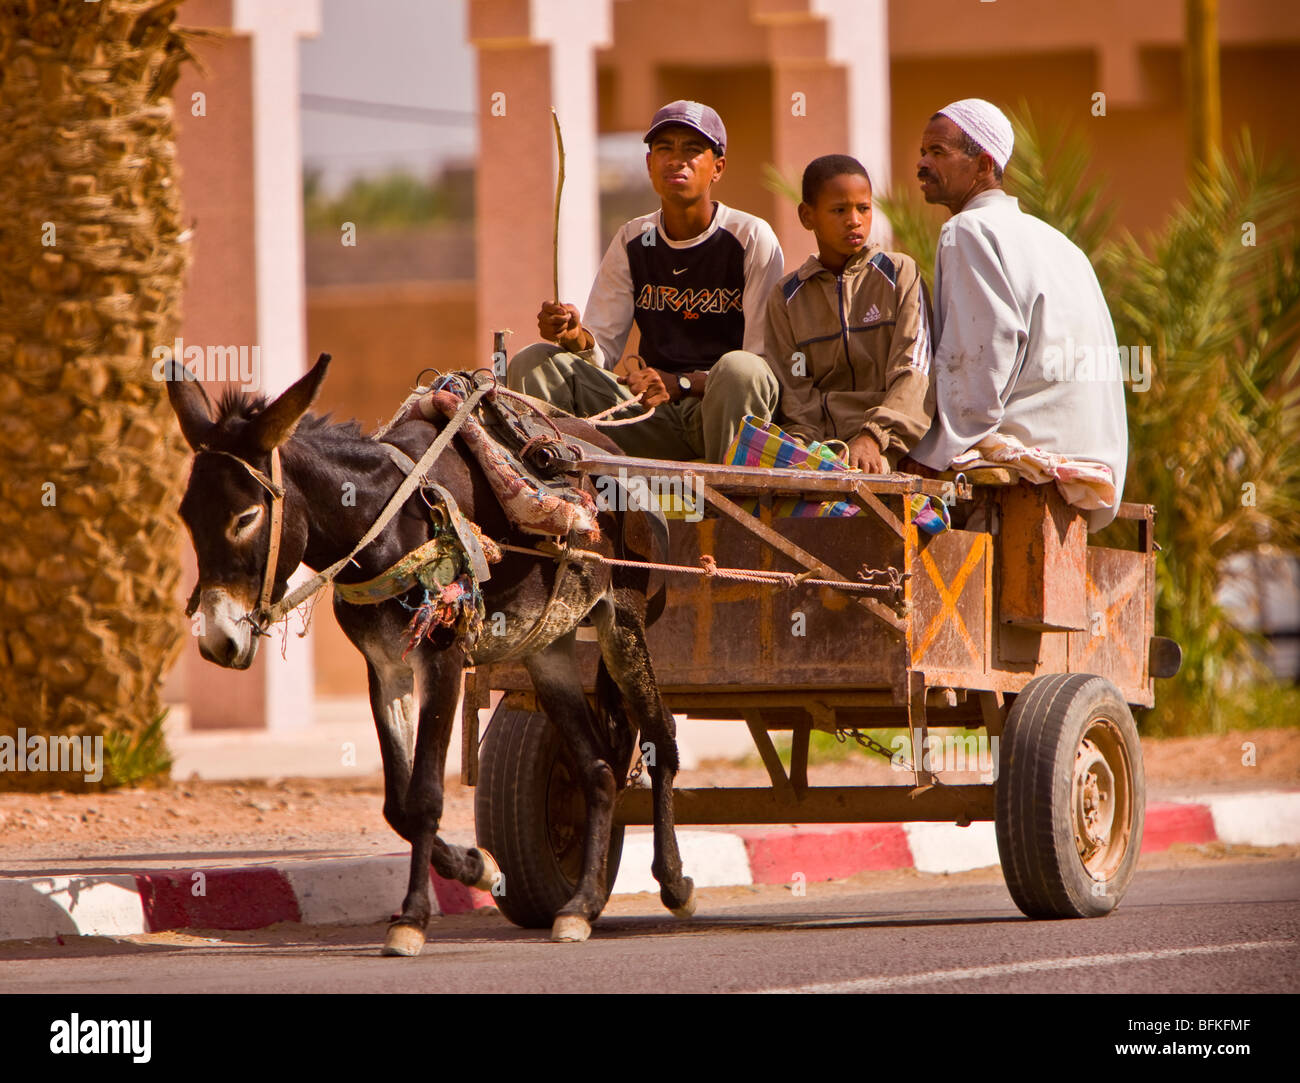 ZAGORA, MOROCCO - Men riding in donkey cart. Stock Photo